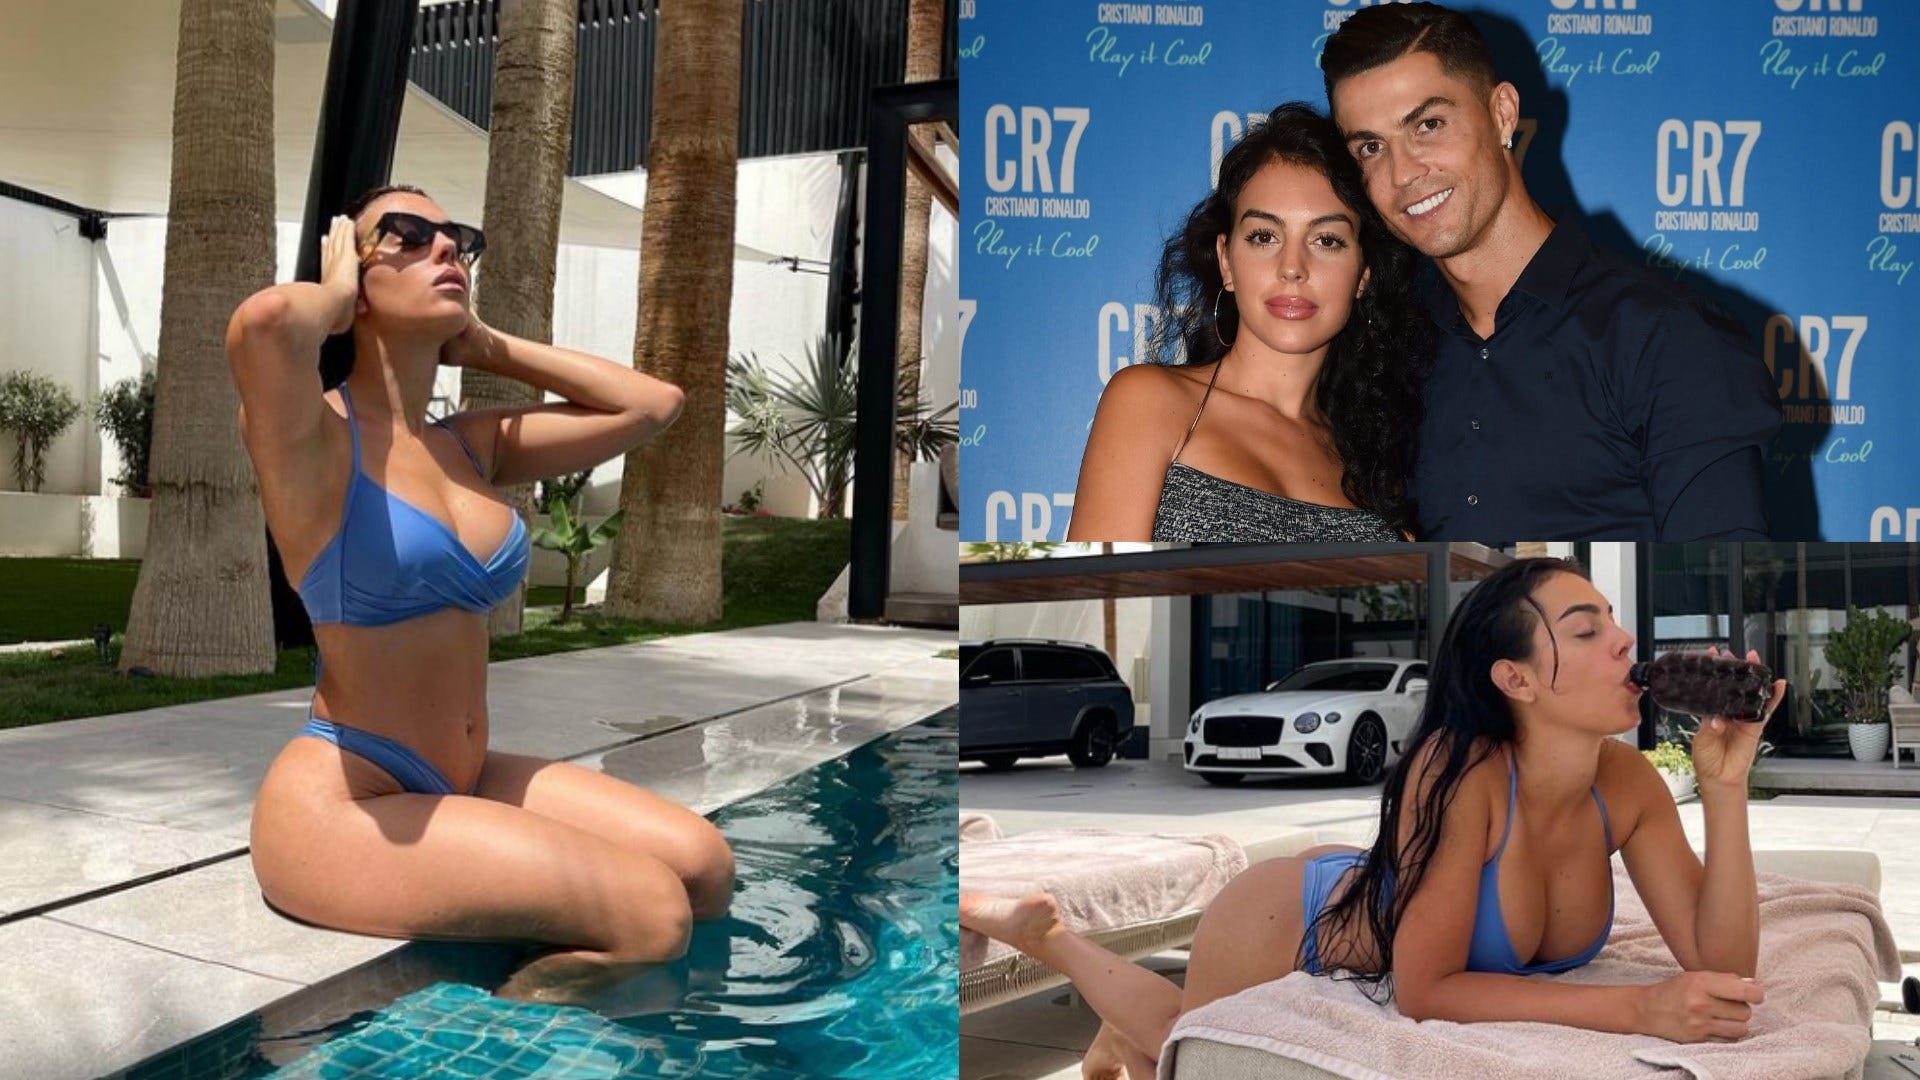 Cristiano Ronaldos girlfriend Georgina Rodriguez posts racy bikini pictures on Instagram as she risks breaking strict Saudi Arabian law Goal US pic